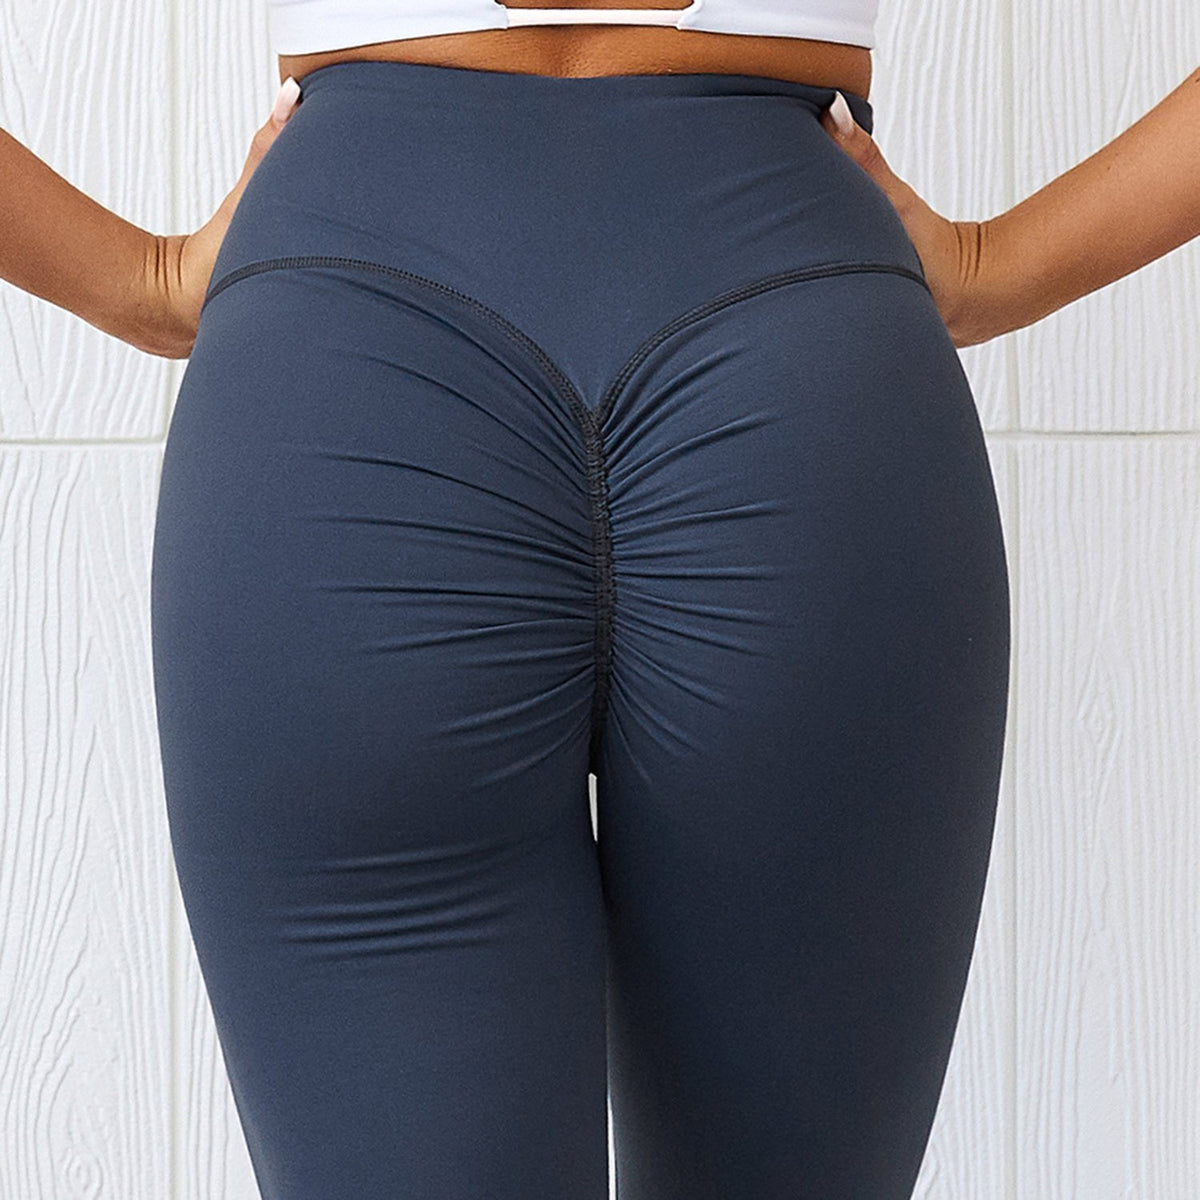 Scrunch Butt Lift peach butt Fitness Pants Yoga Pants – W.T.I. Design